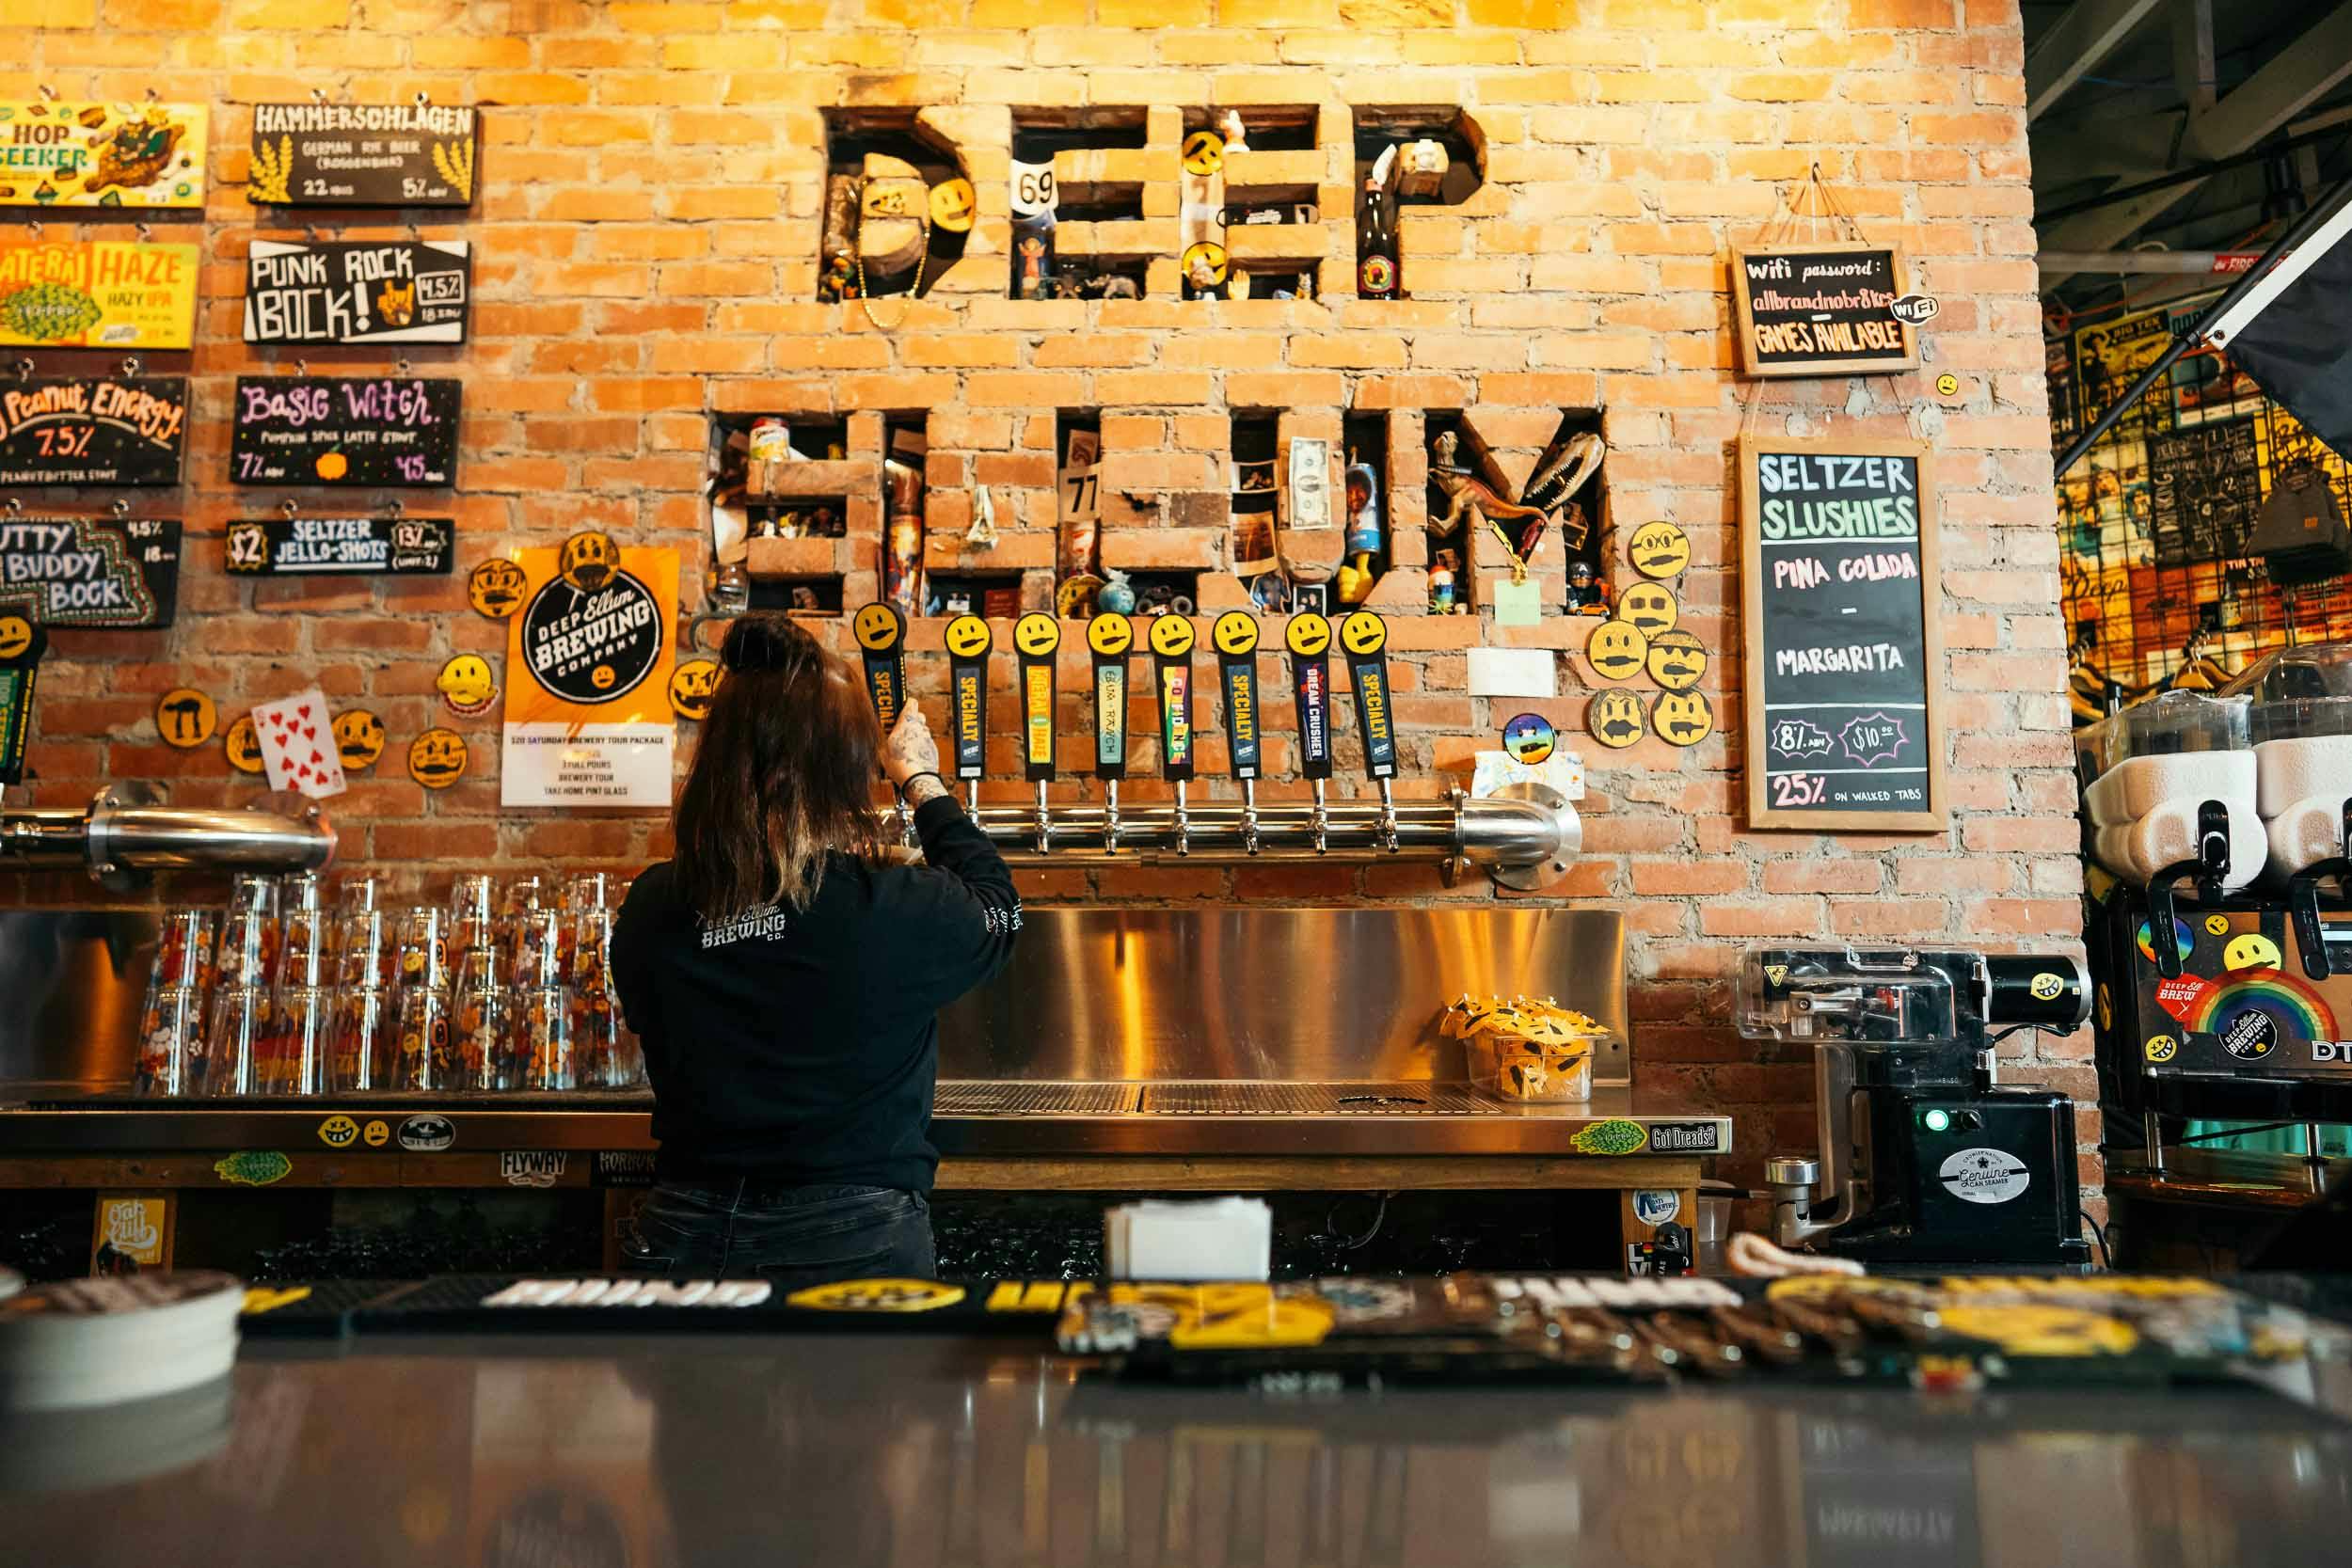 Deep Ellum brewery taproom up close